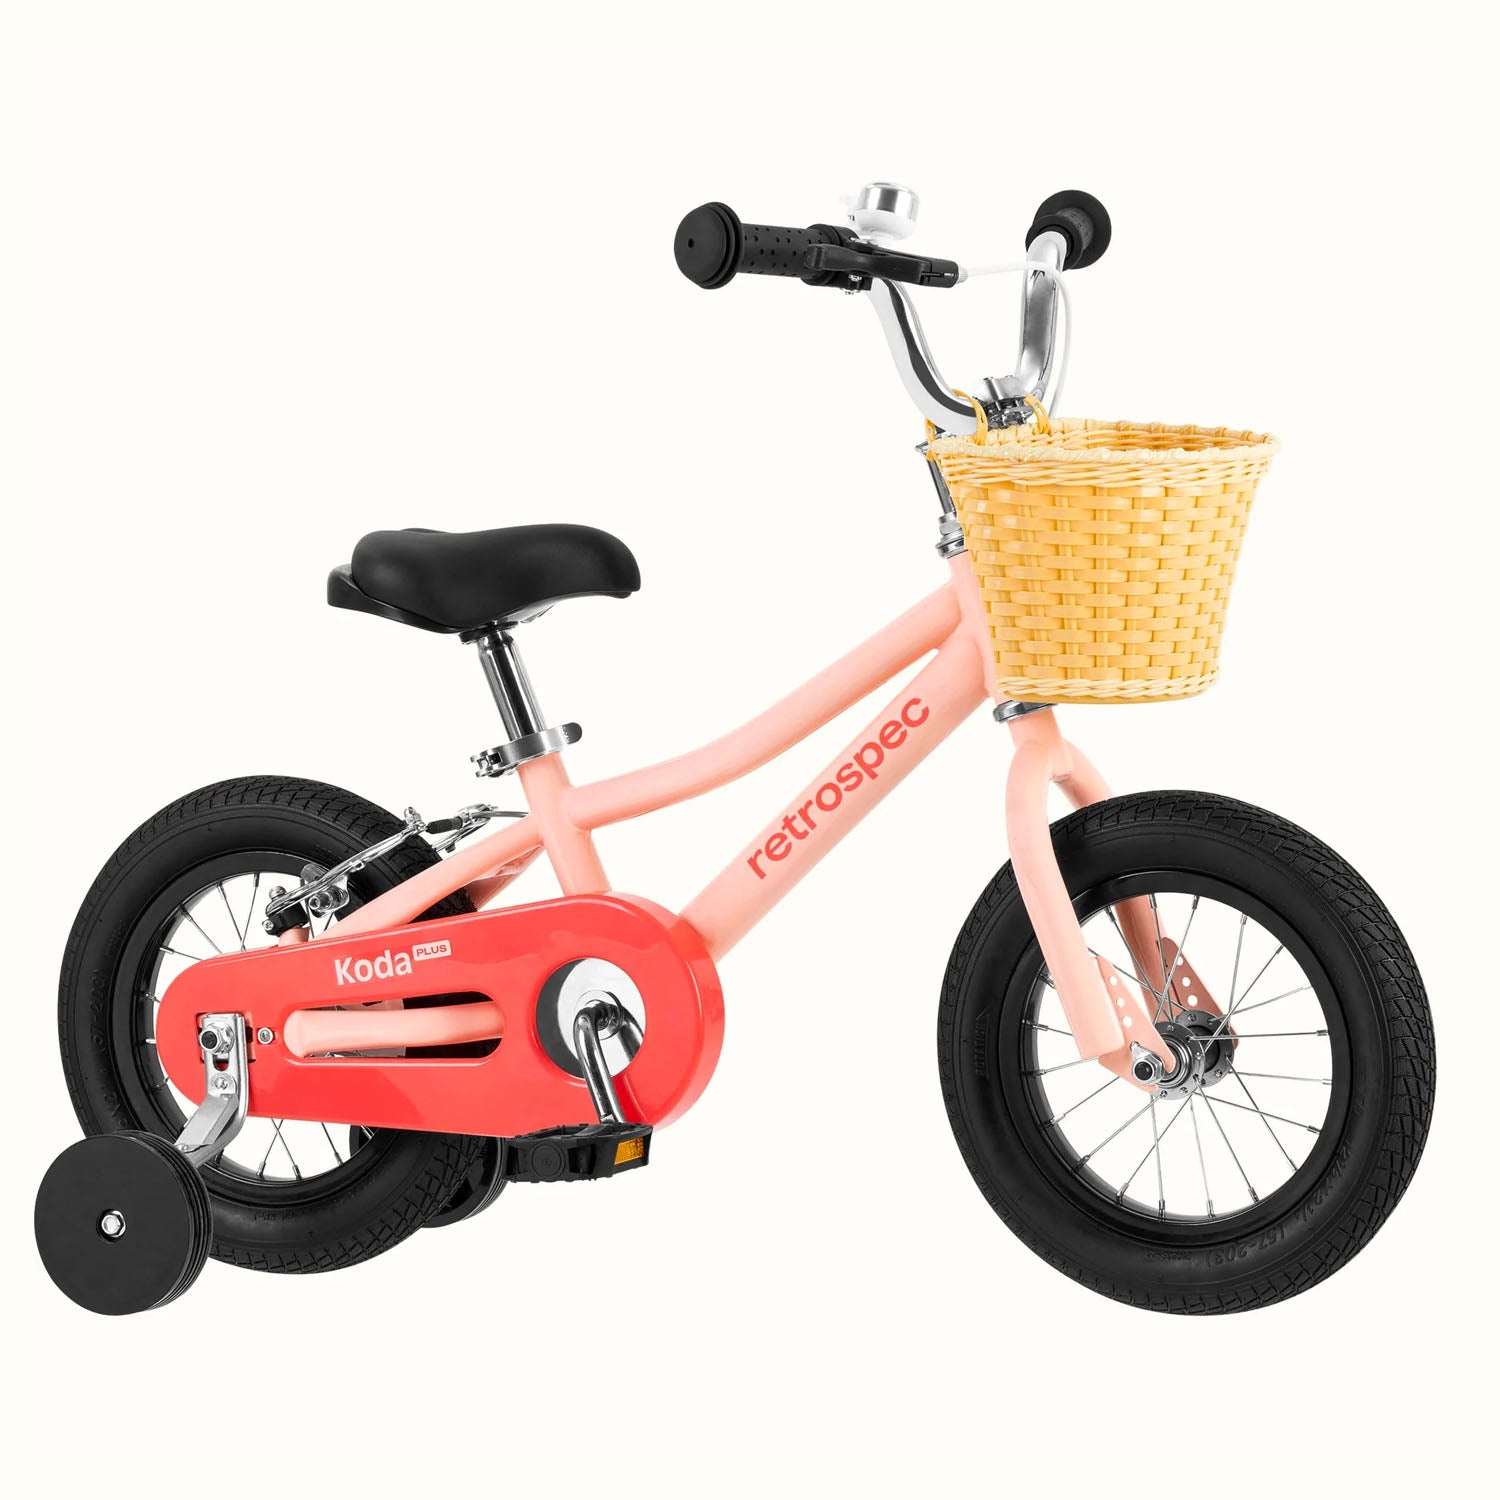 Retrospec Koda 12" Kids Bike > 12" > Blush Pink 5473, Bixby Bicycles, bixbybicycles.com